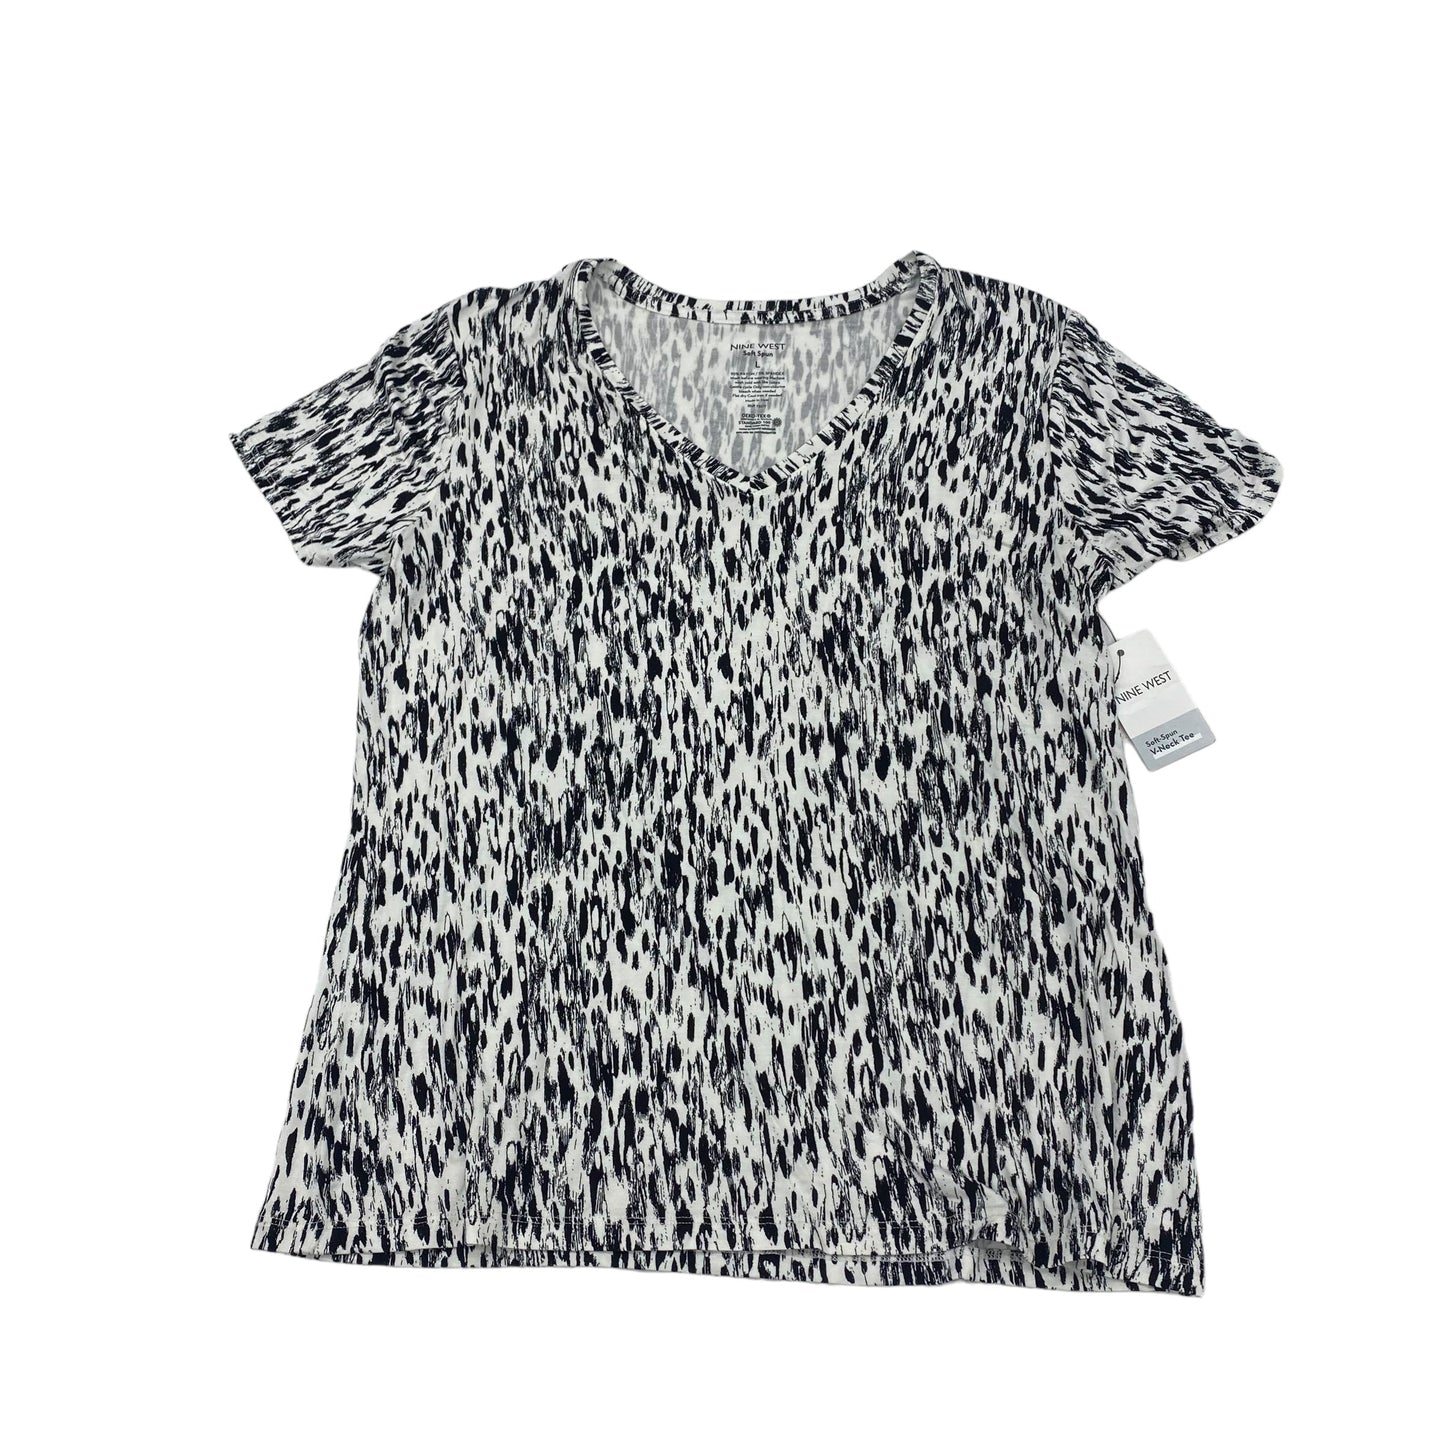 Black & White Top Short Sleeve Nine West Apparel, Size L